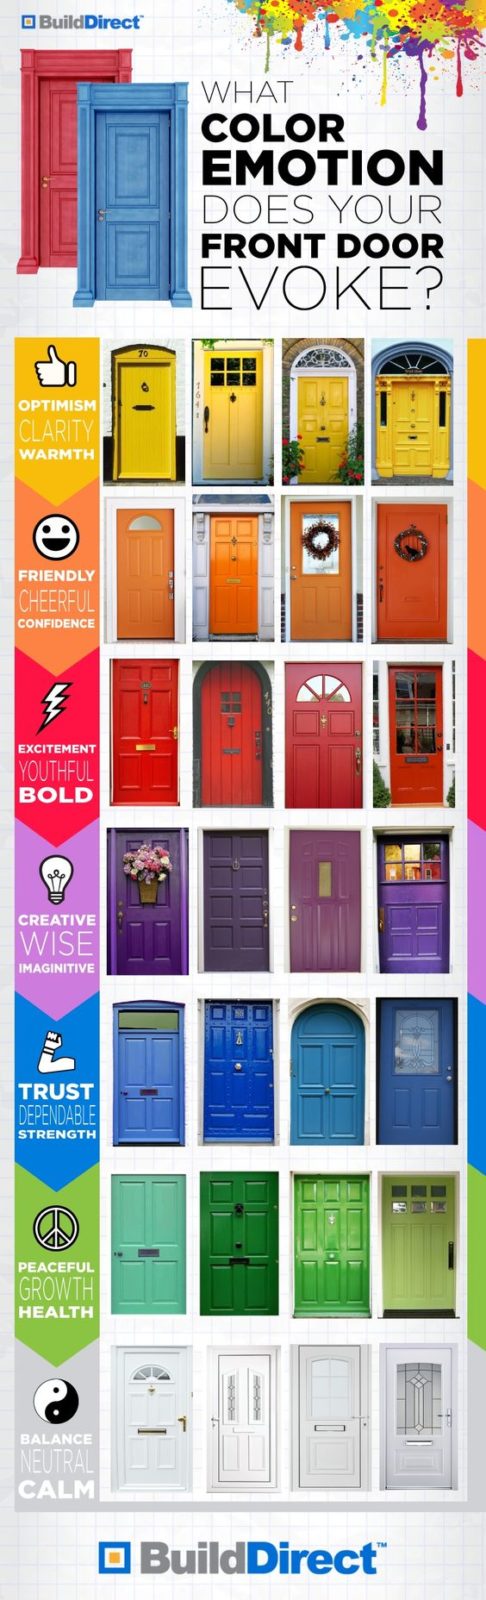 What Emotion Does Your Front Door Color Evoke